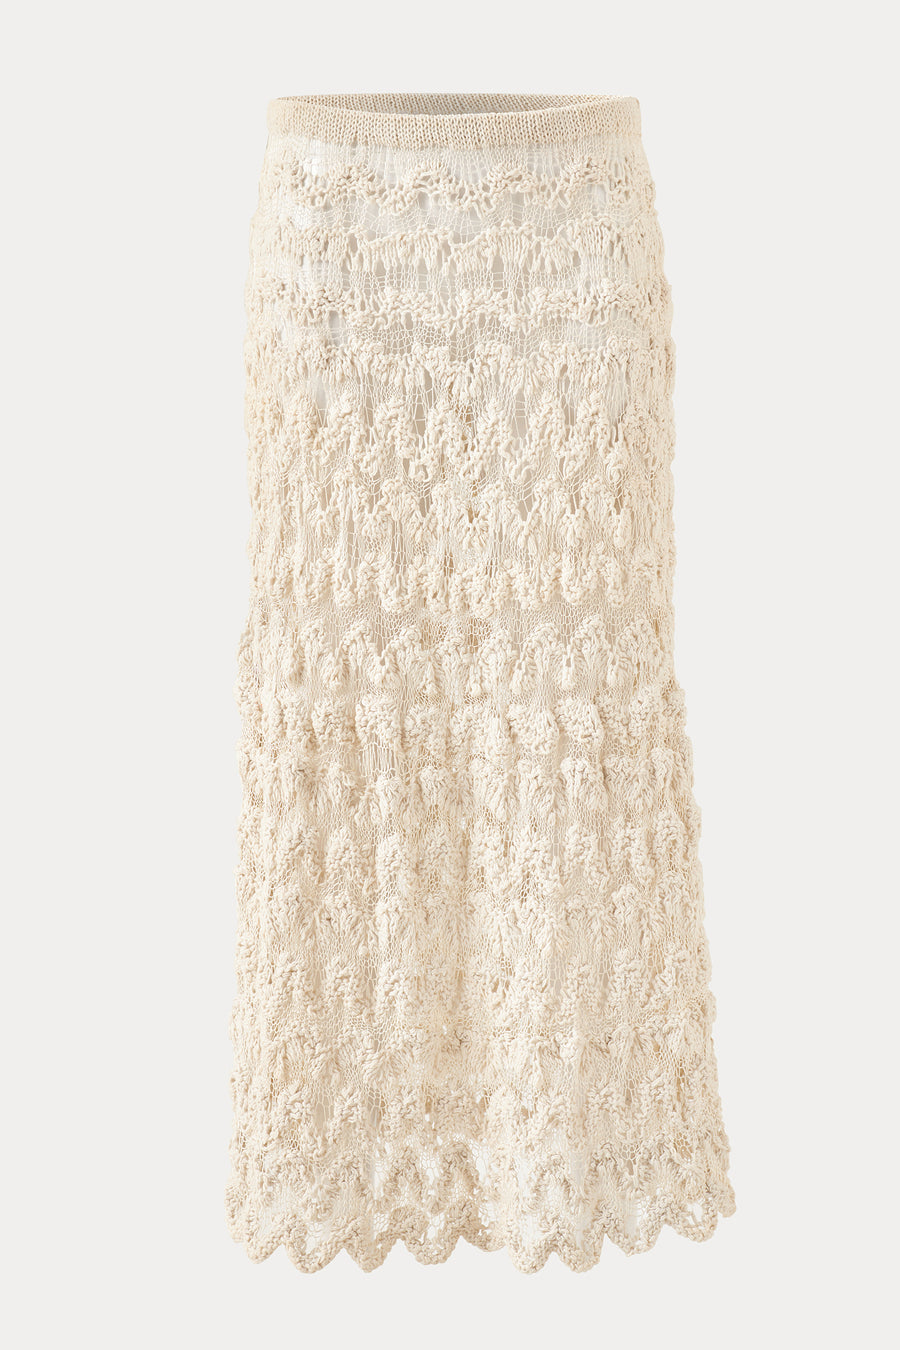 Hand spun silk and cotton knitted skirt